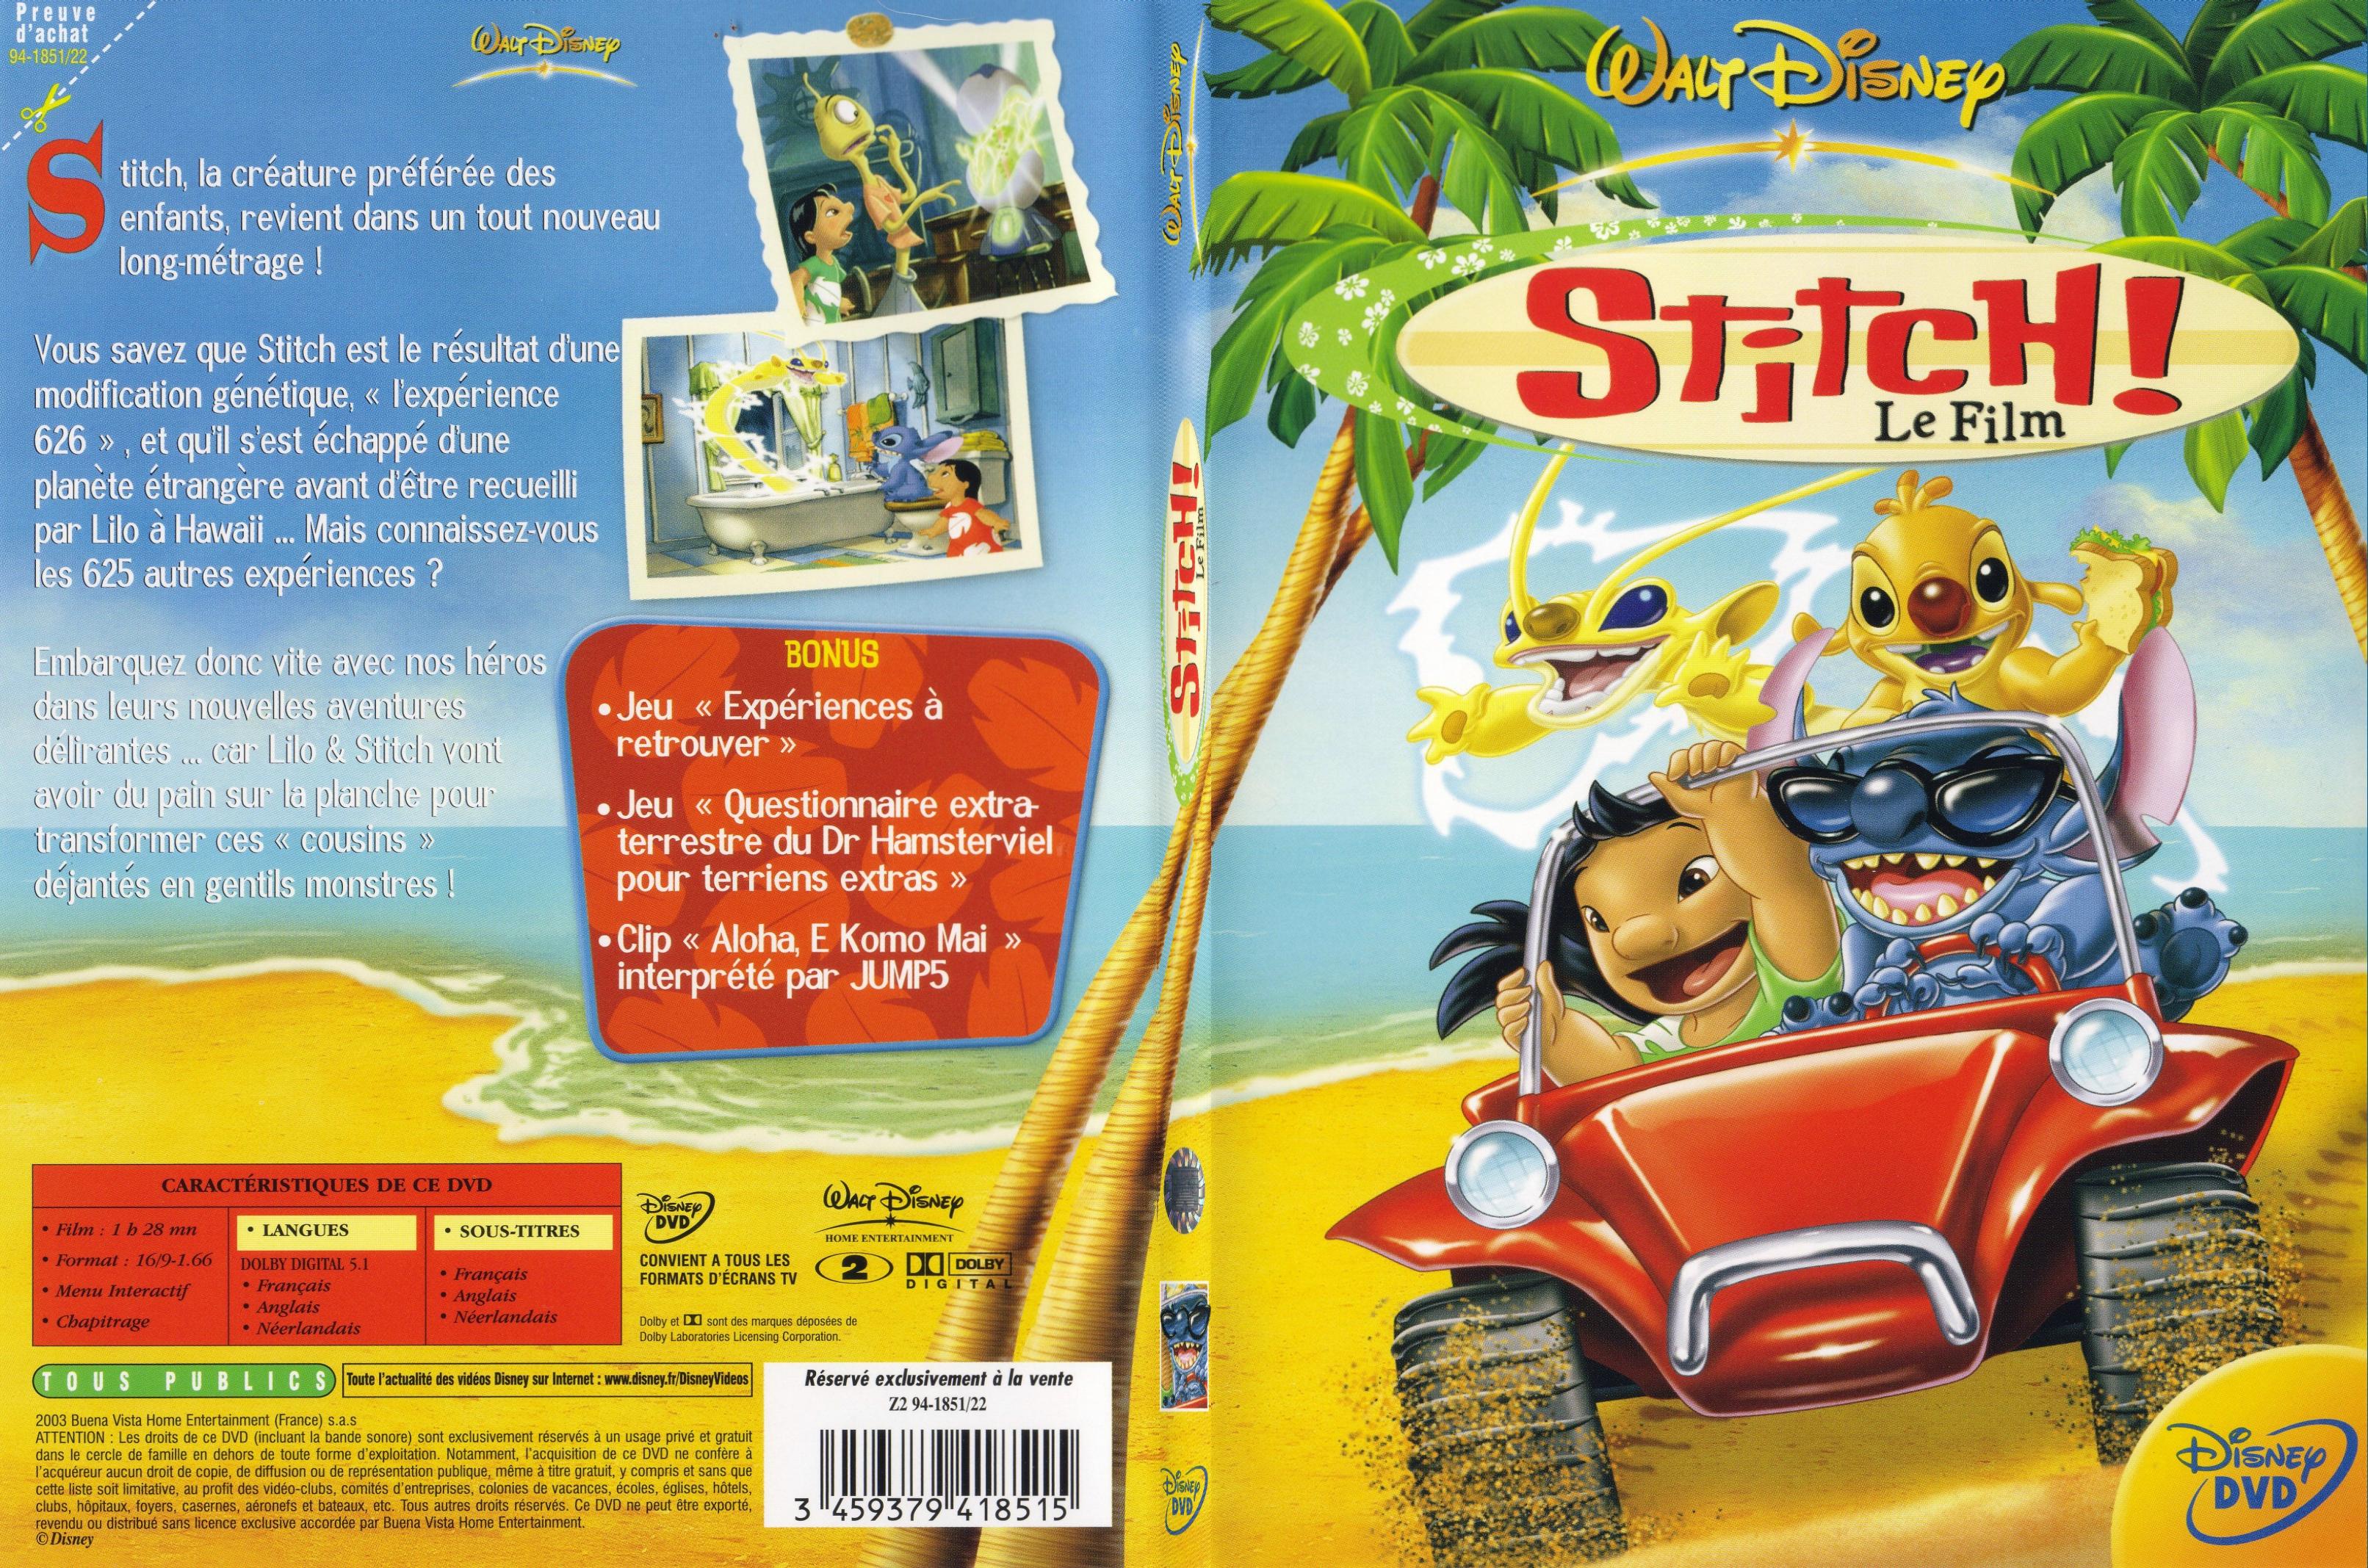 Jaquette DVD Stitch le film - SLIM